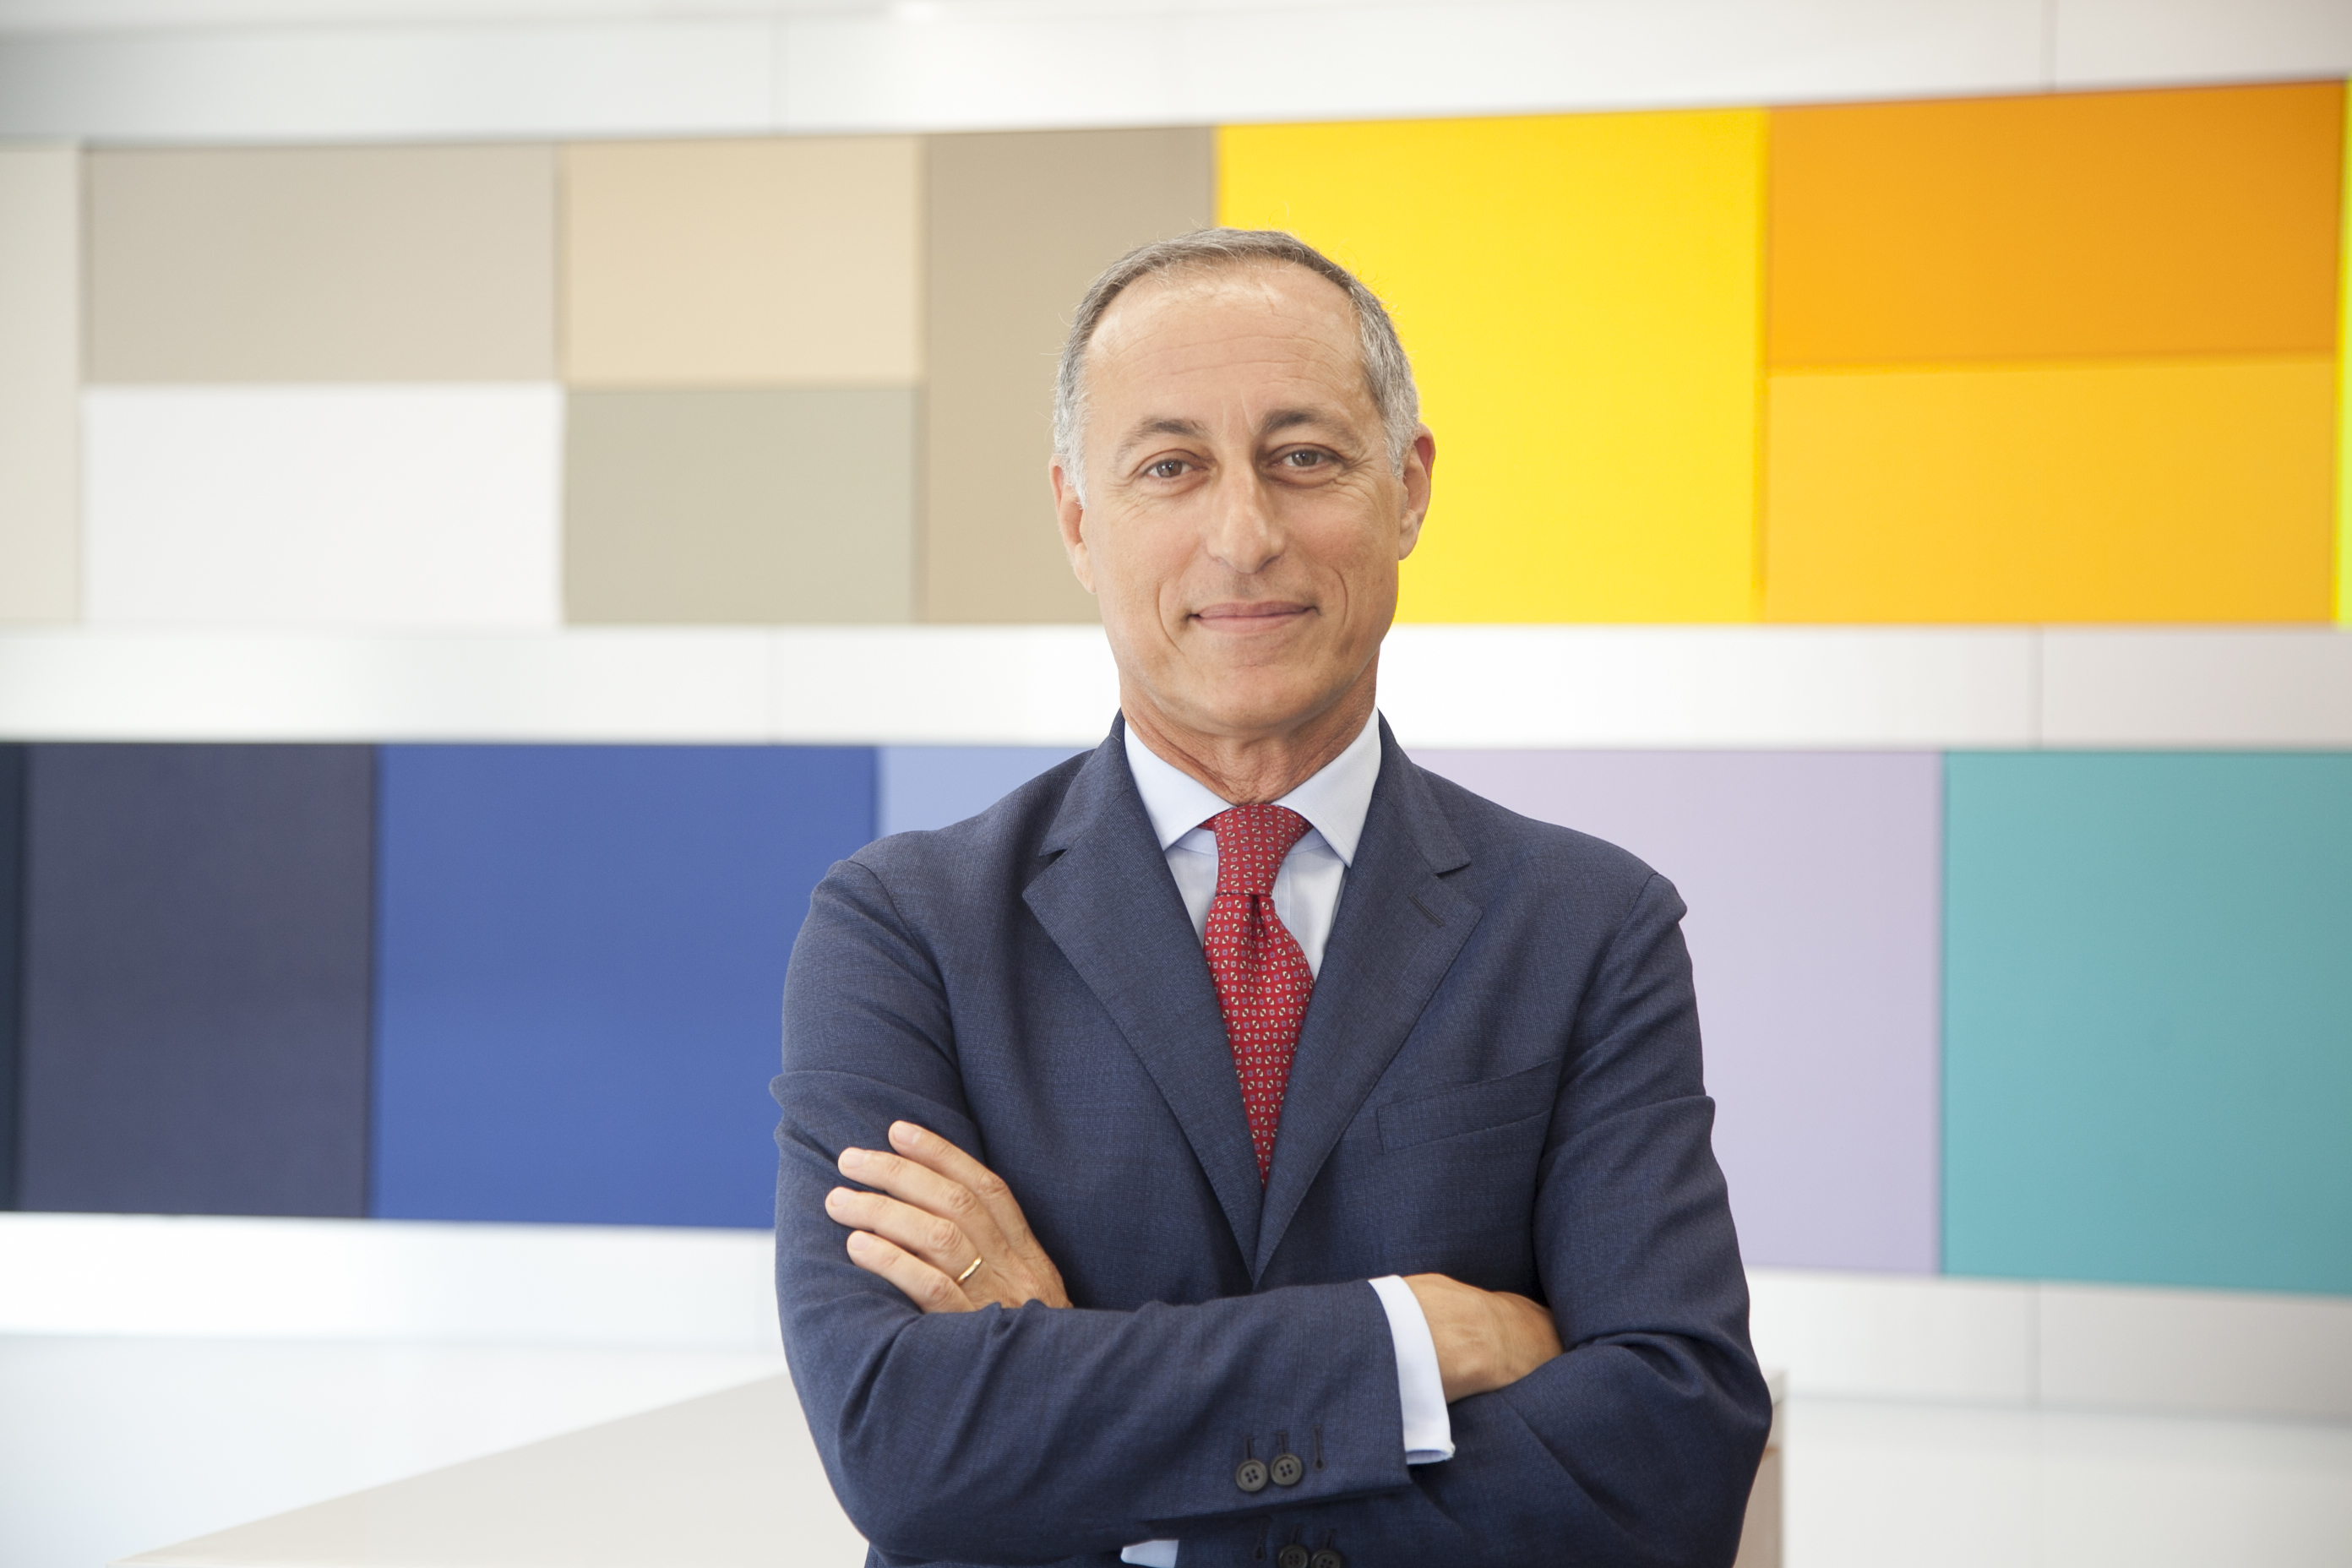 Klopman’s CEO, Alfonso Marra